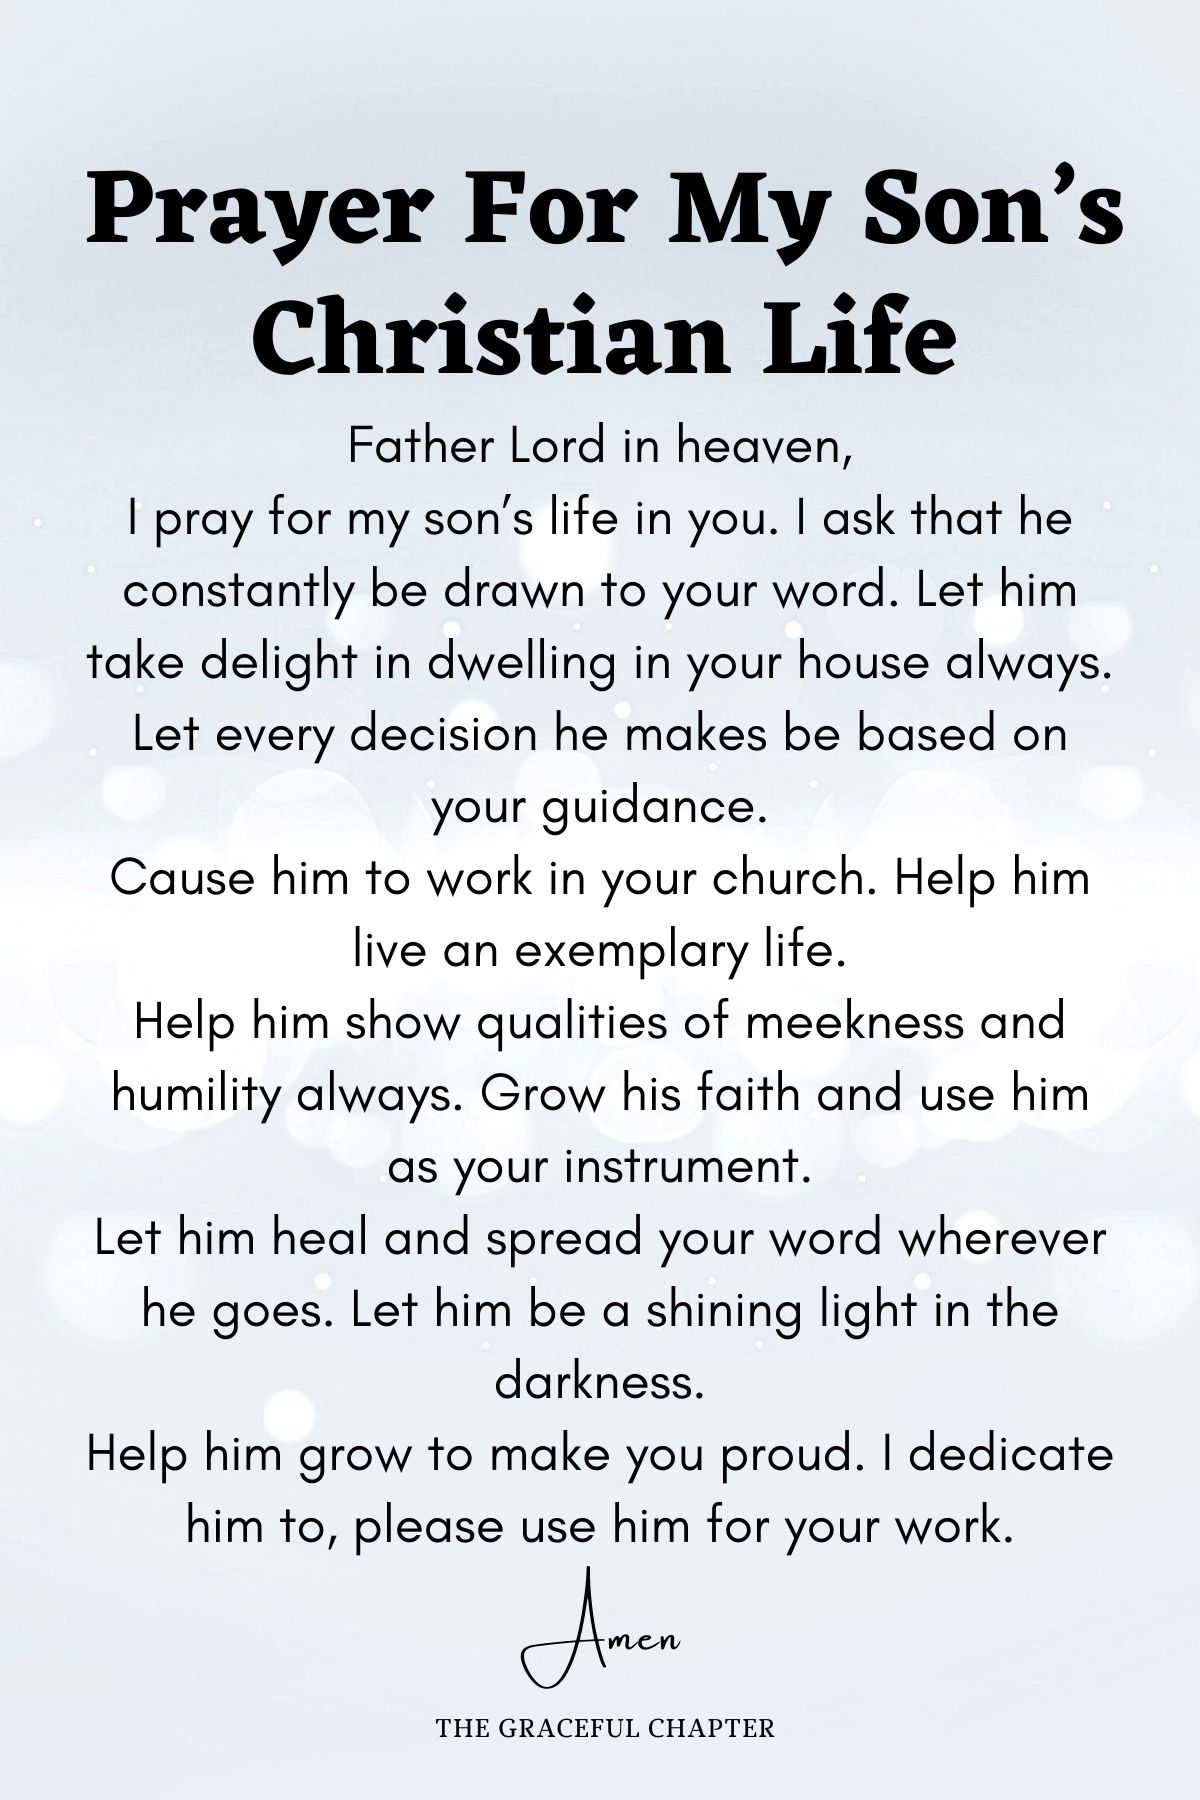 Prayer for my son’s Christian life